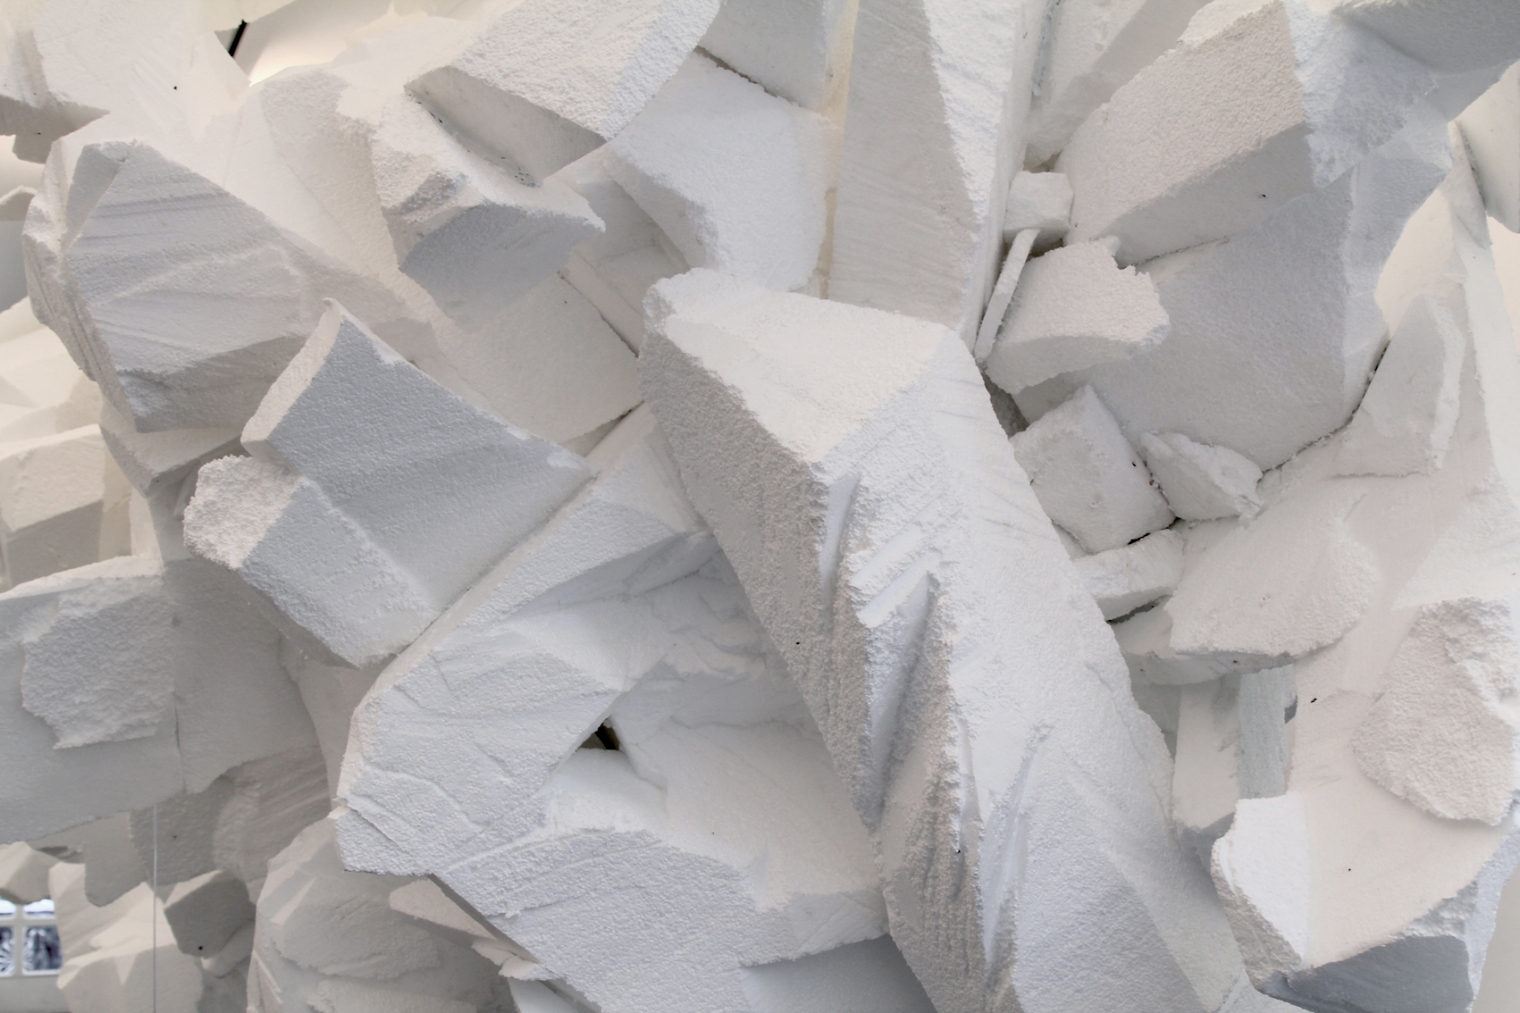 CATERPILLAR  Material: styrofoam, steel, pleksiglas; Dimension: 670 x 280 x 280 cm; Date: 2018